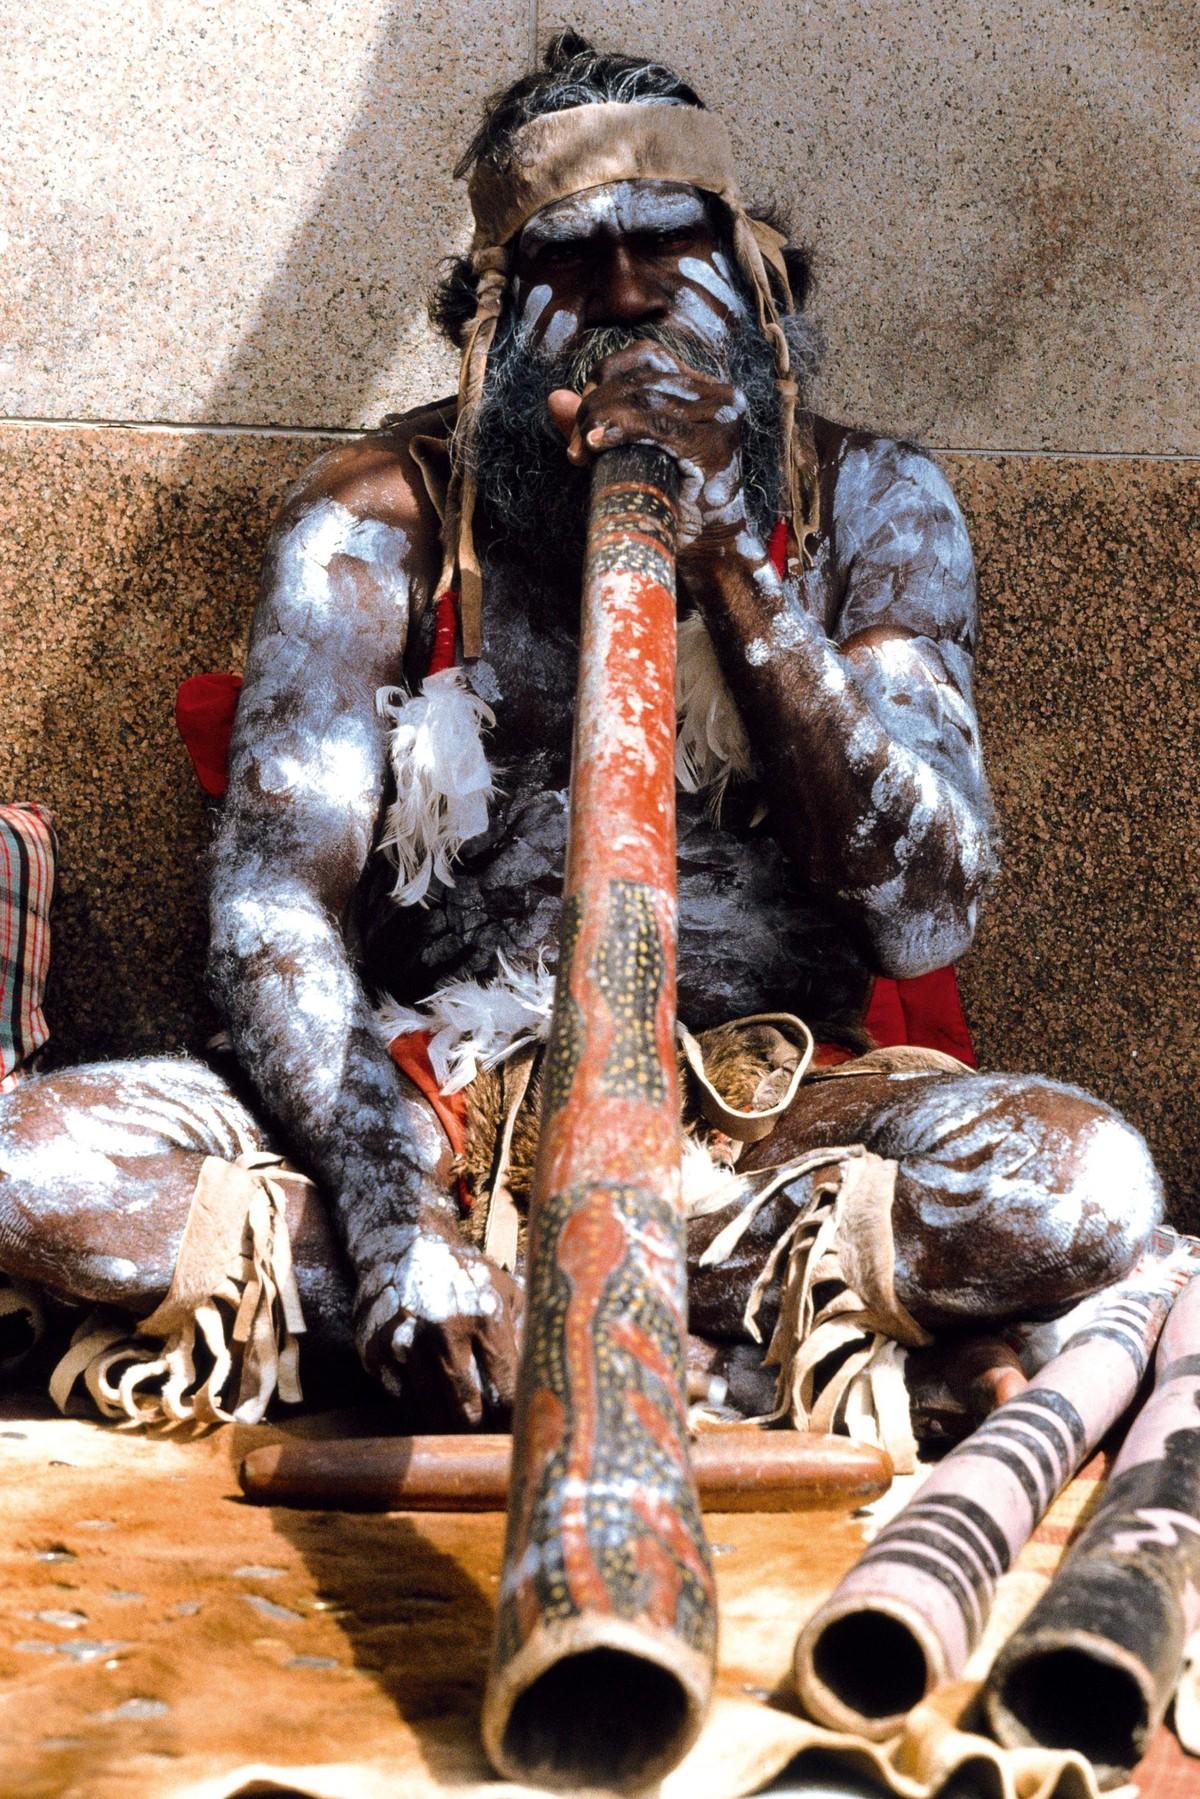 A didgeridoo player